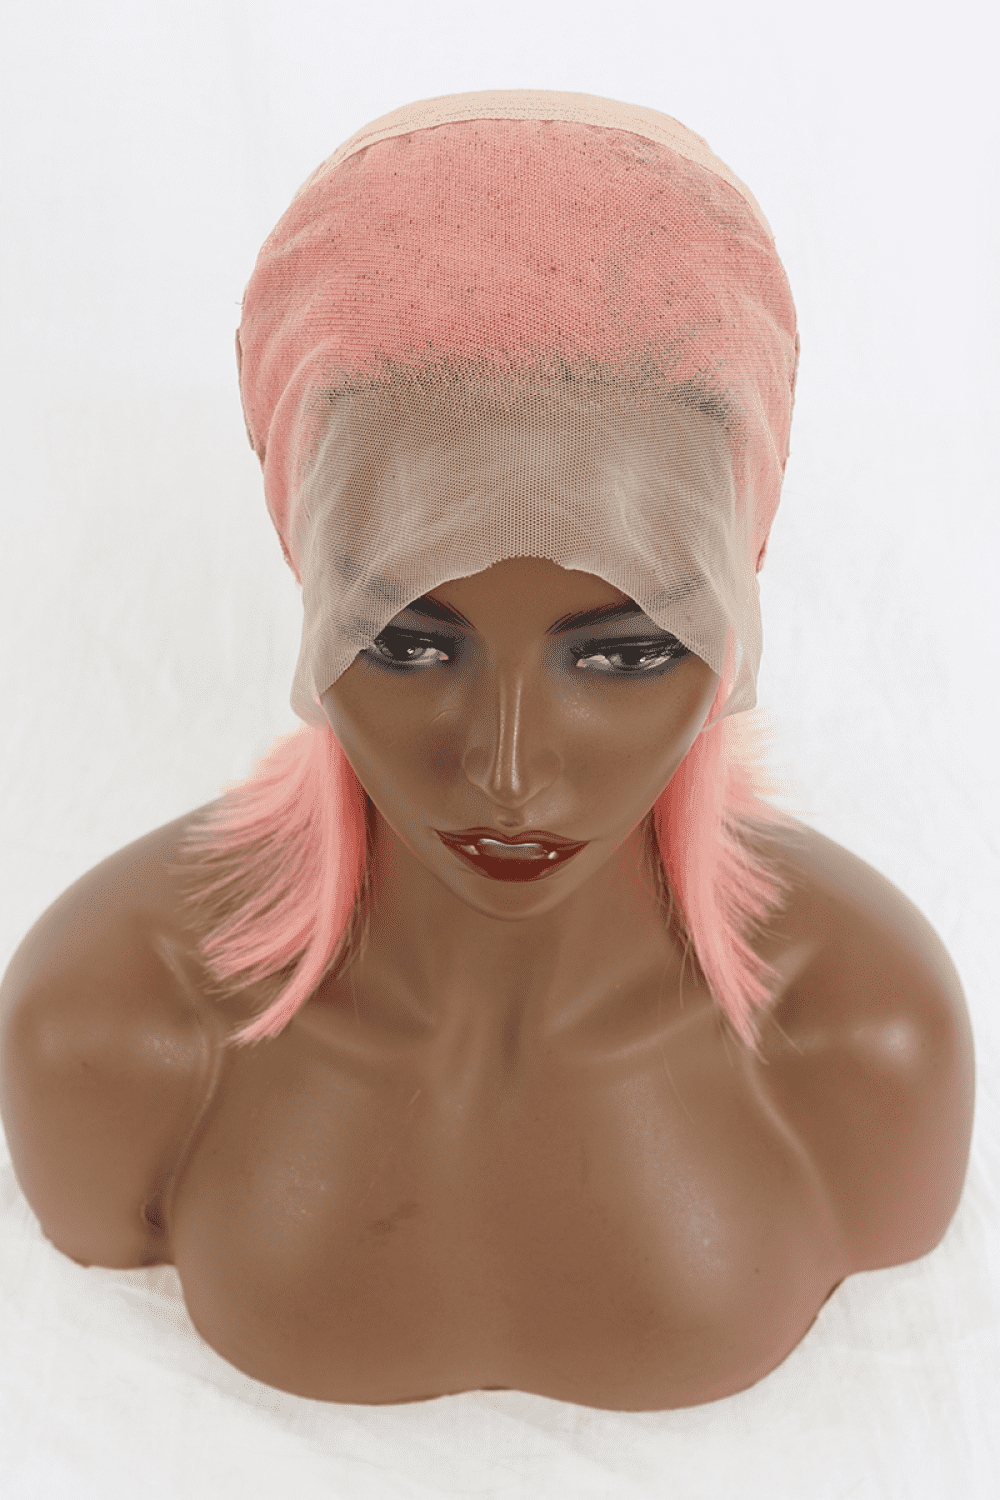 HUMAN HAIR 12" Pink 165g Lace Front Wig Thick 150% Density Shoulder Length Bob